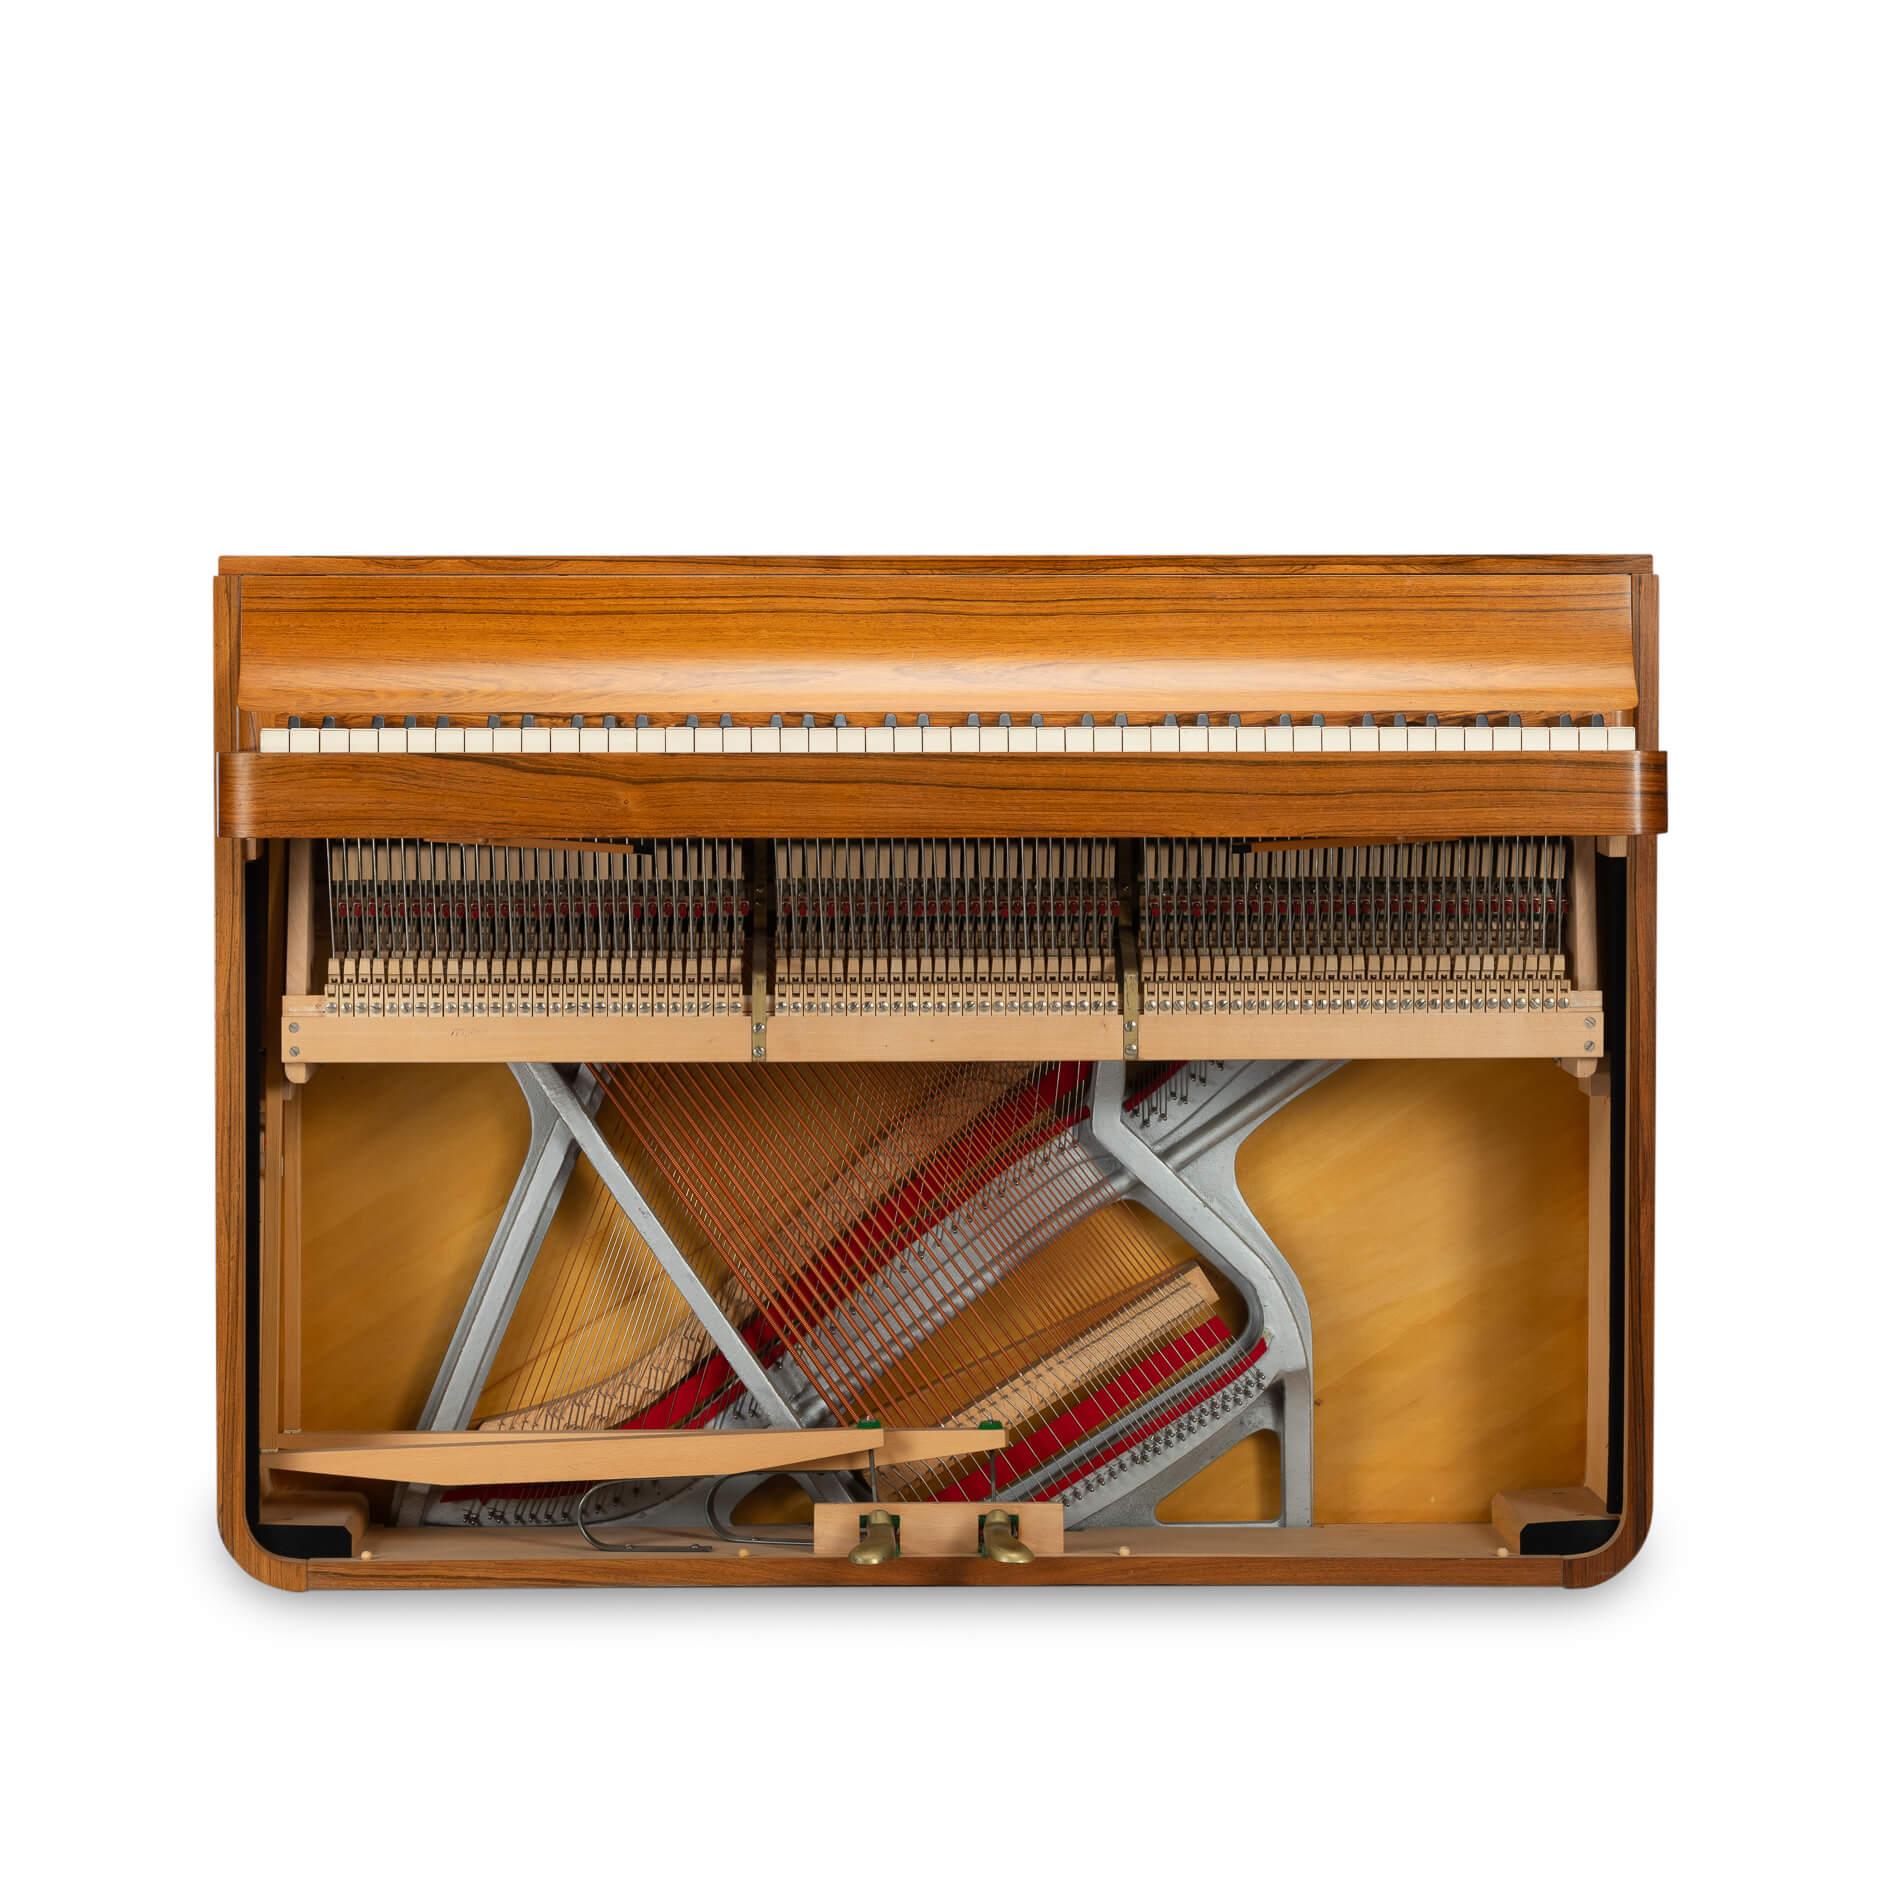 Mid-Century Modern Danish Design Midcentury Pianette by Louis Zwicki in Rosewood, 1950s